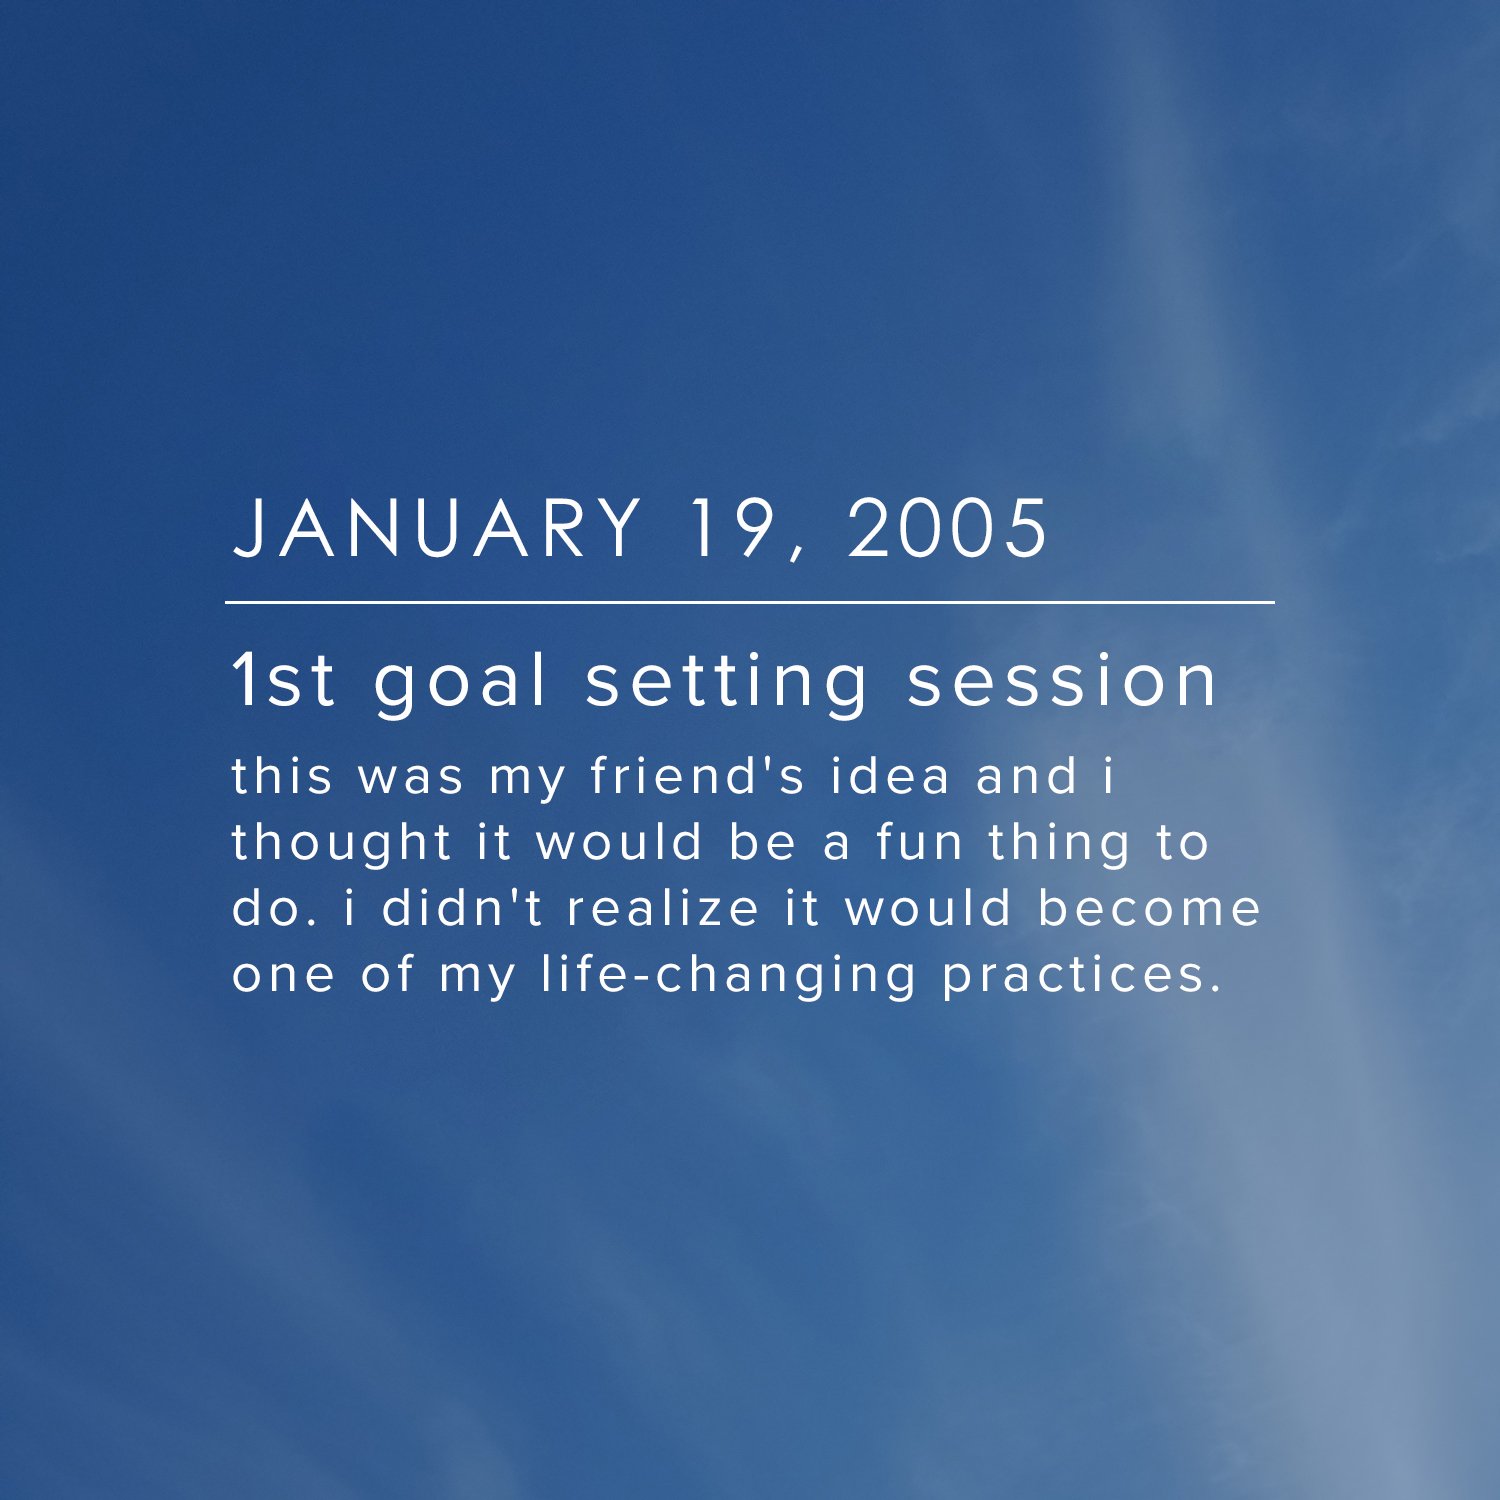 January 19, 2005 - 1st goal setting session